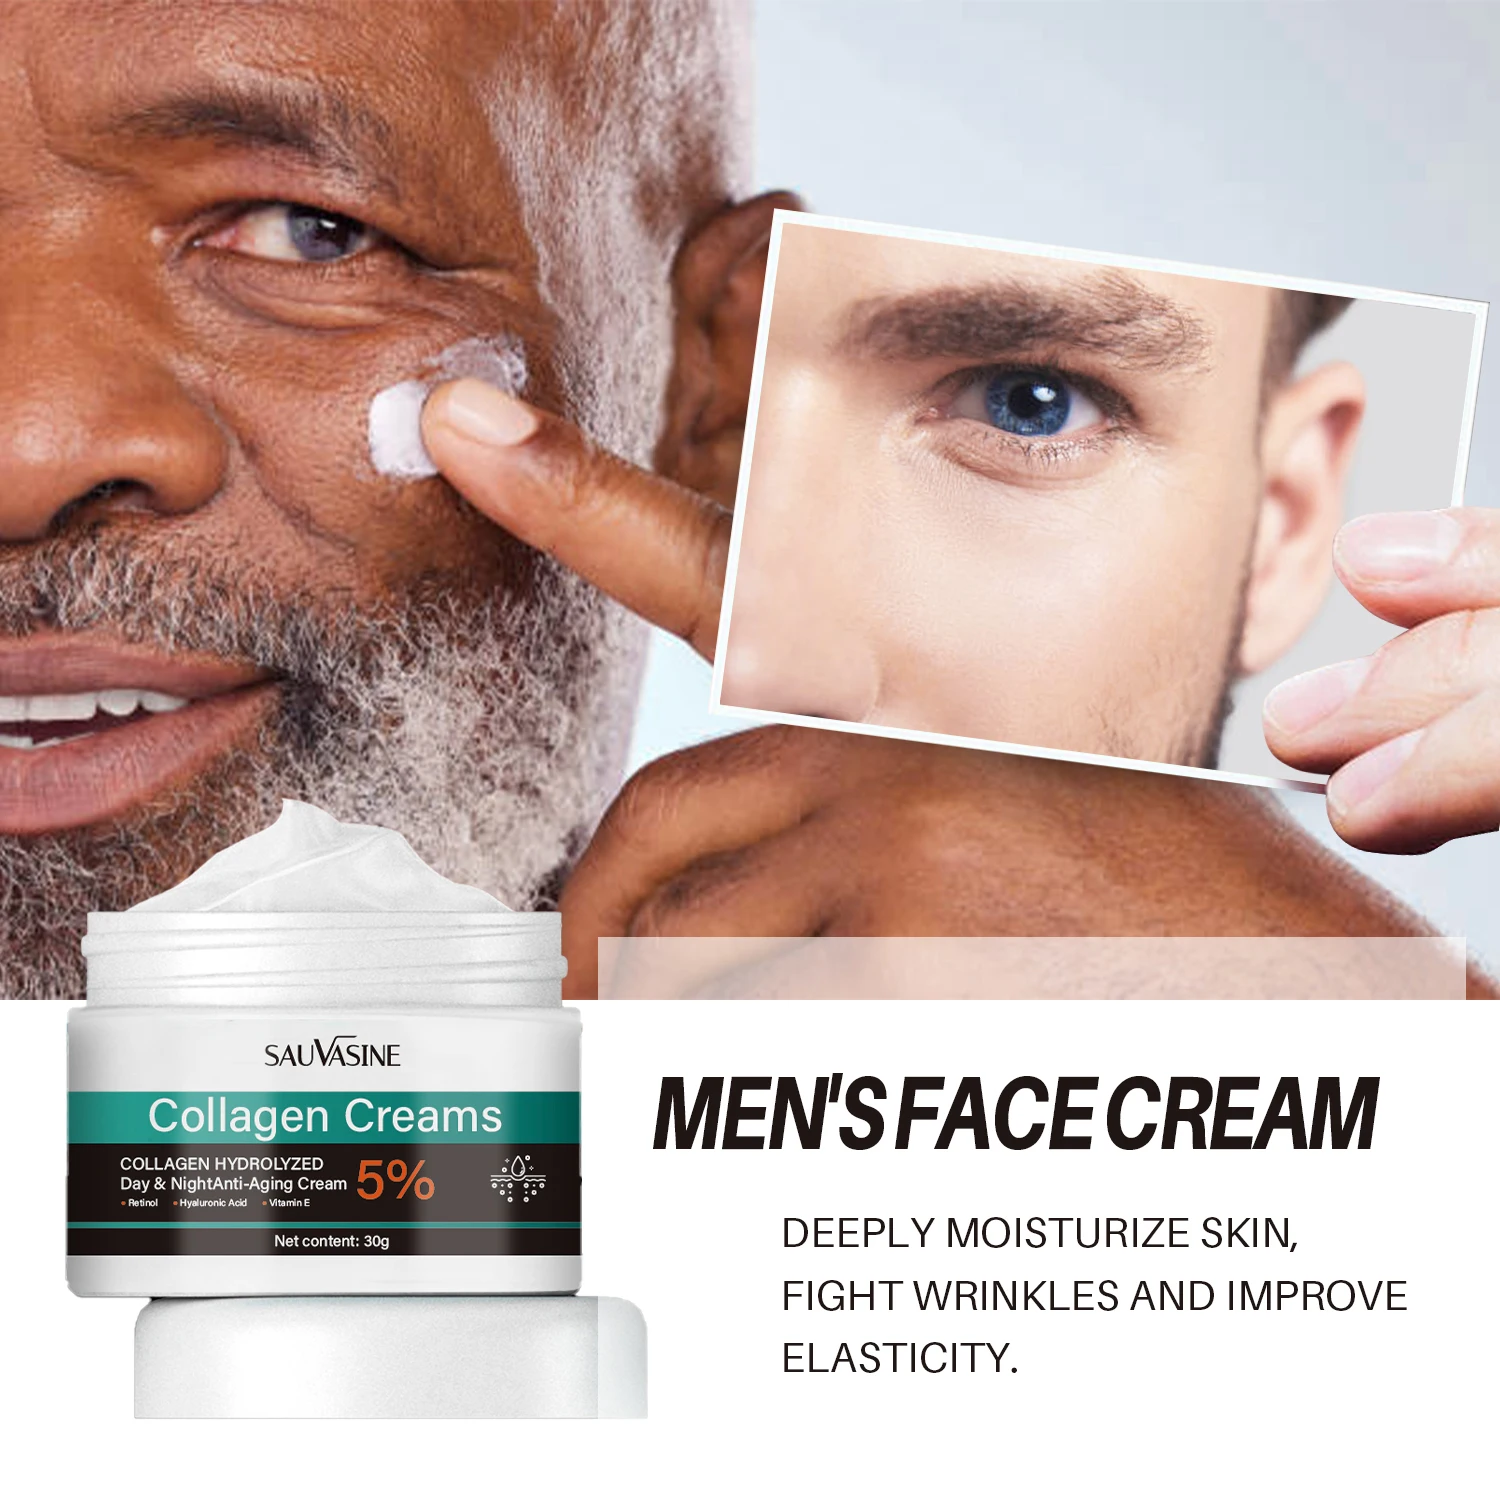 

EELHOE Collagen Creams For Men Anti Wrinkle Anti Aging Face Cream Firming Moisturizing Hyaluronic Acid Cream Facial Care